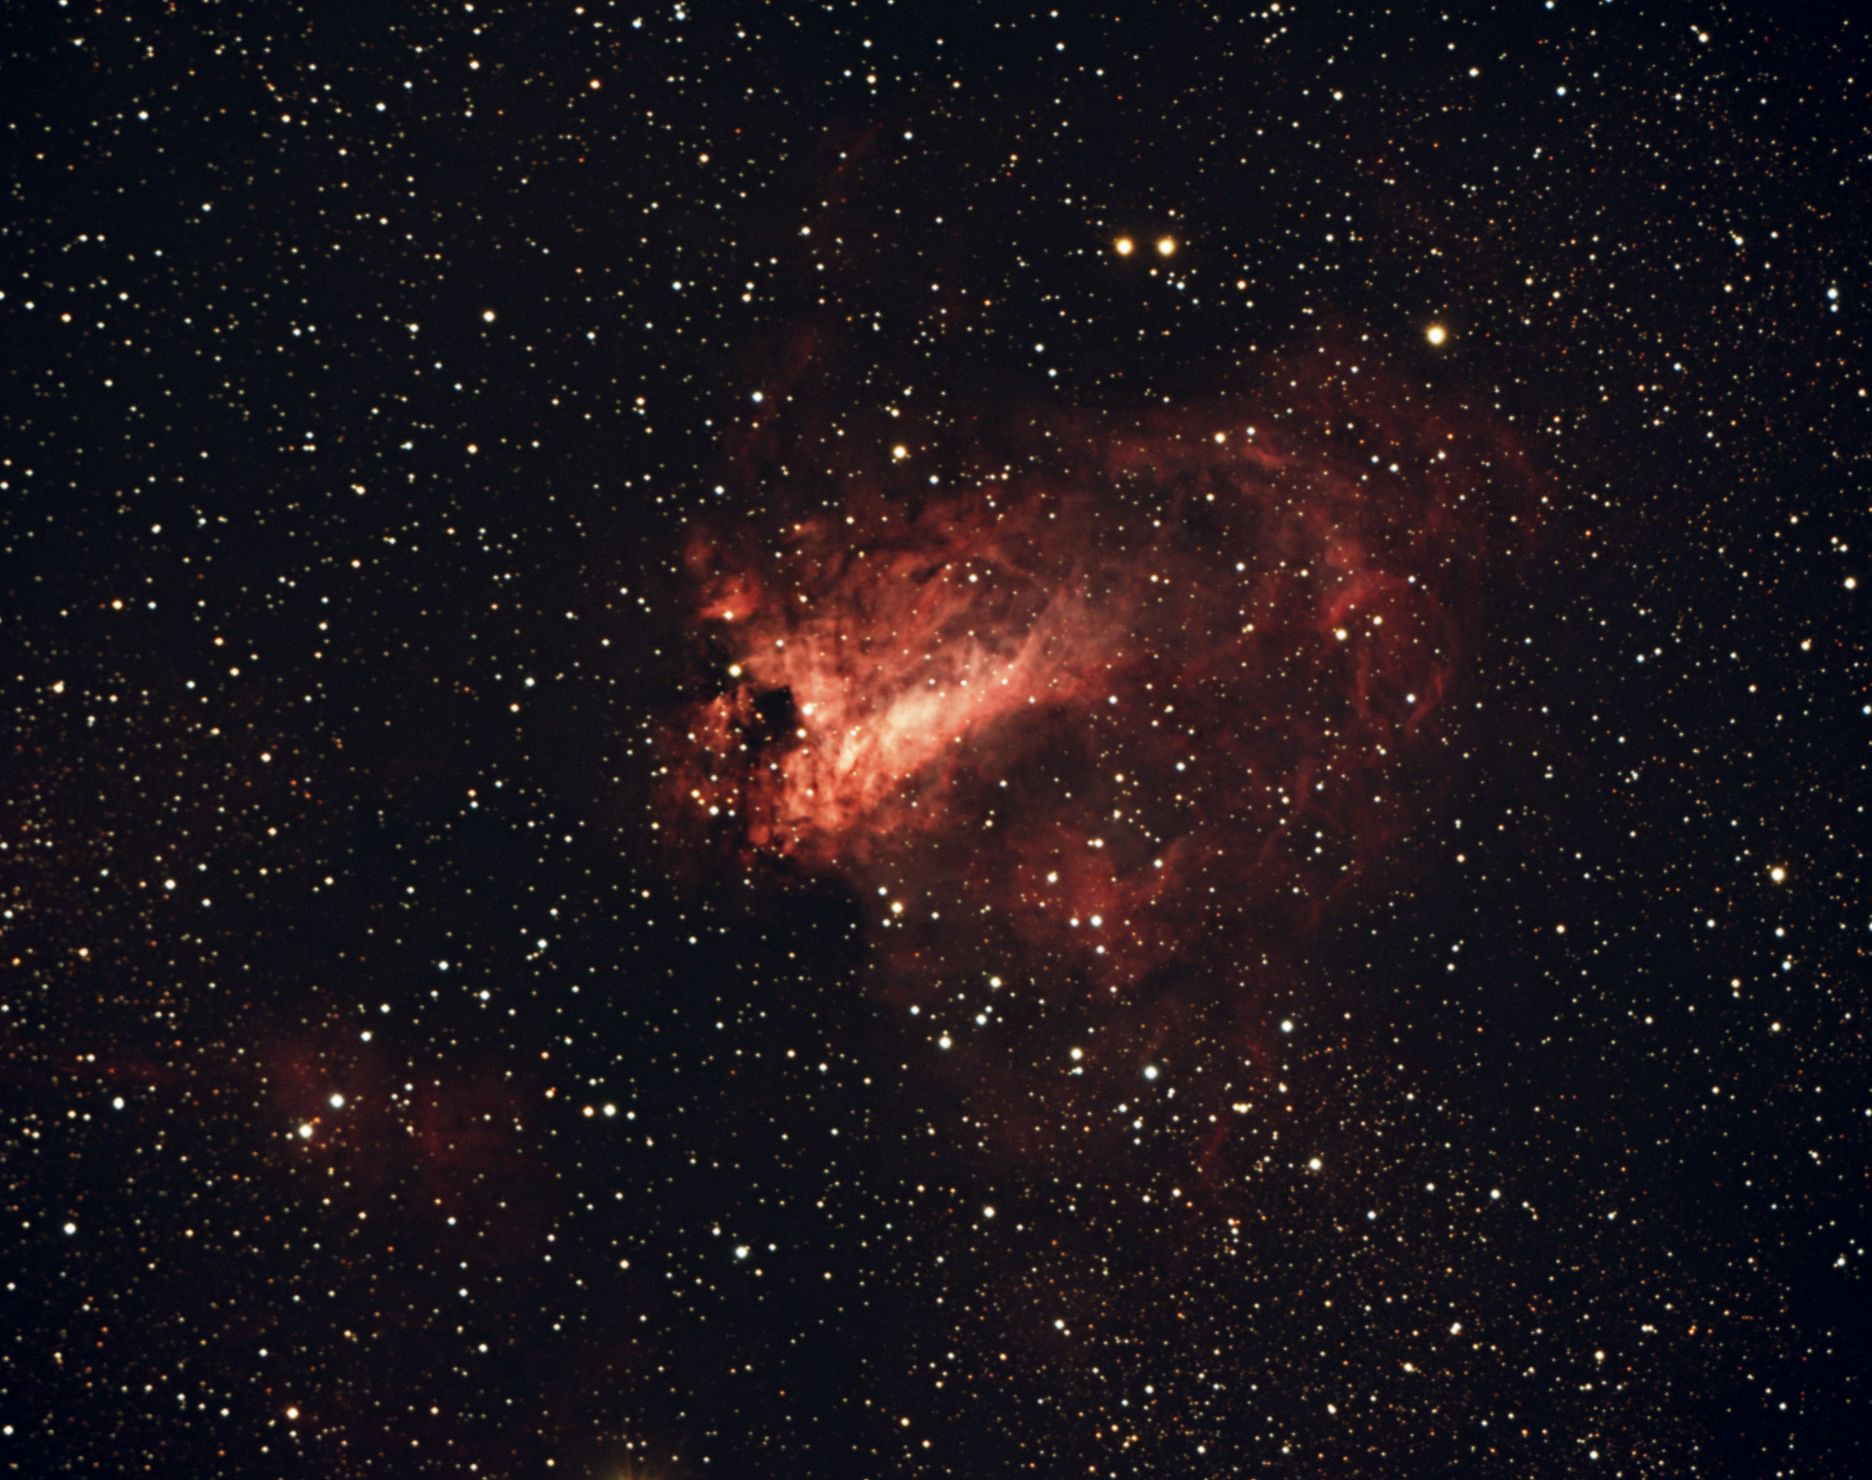 M17 - The Swan Nebula